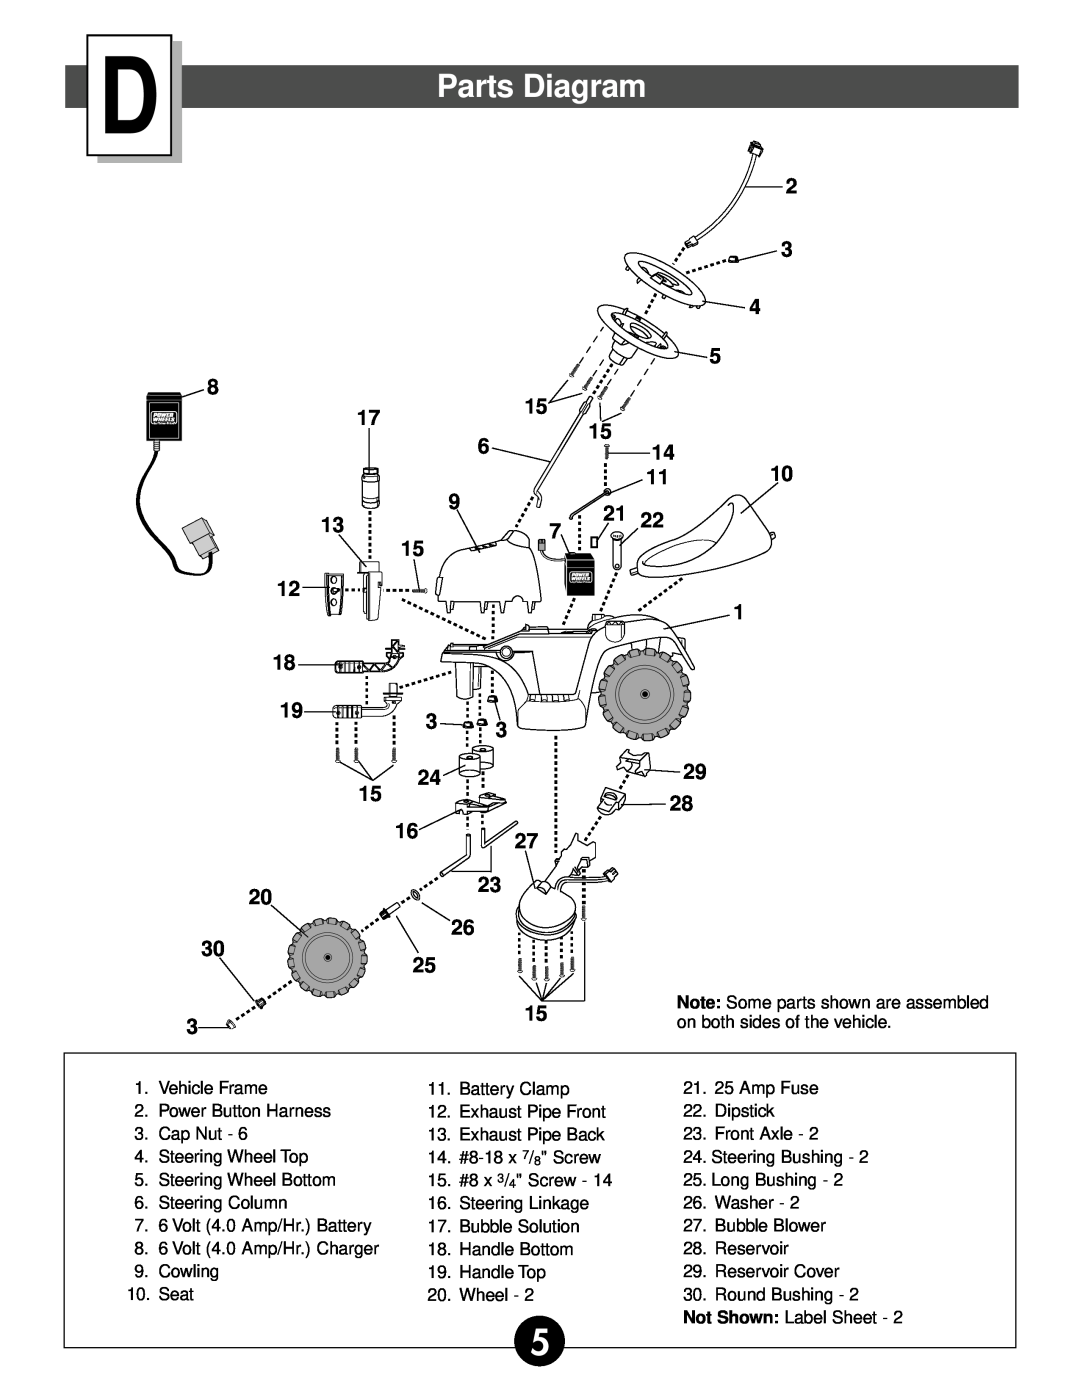 Fisher-Price 75320 owner manual Parts Diagram, 1627, 1110 